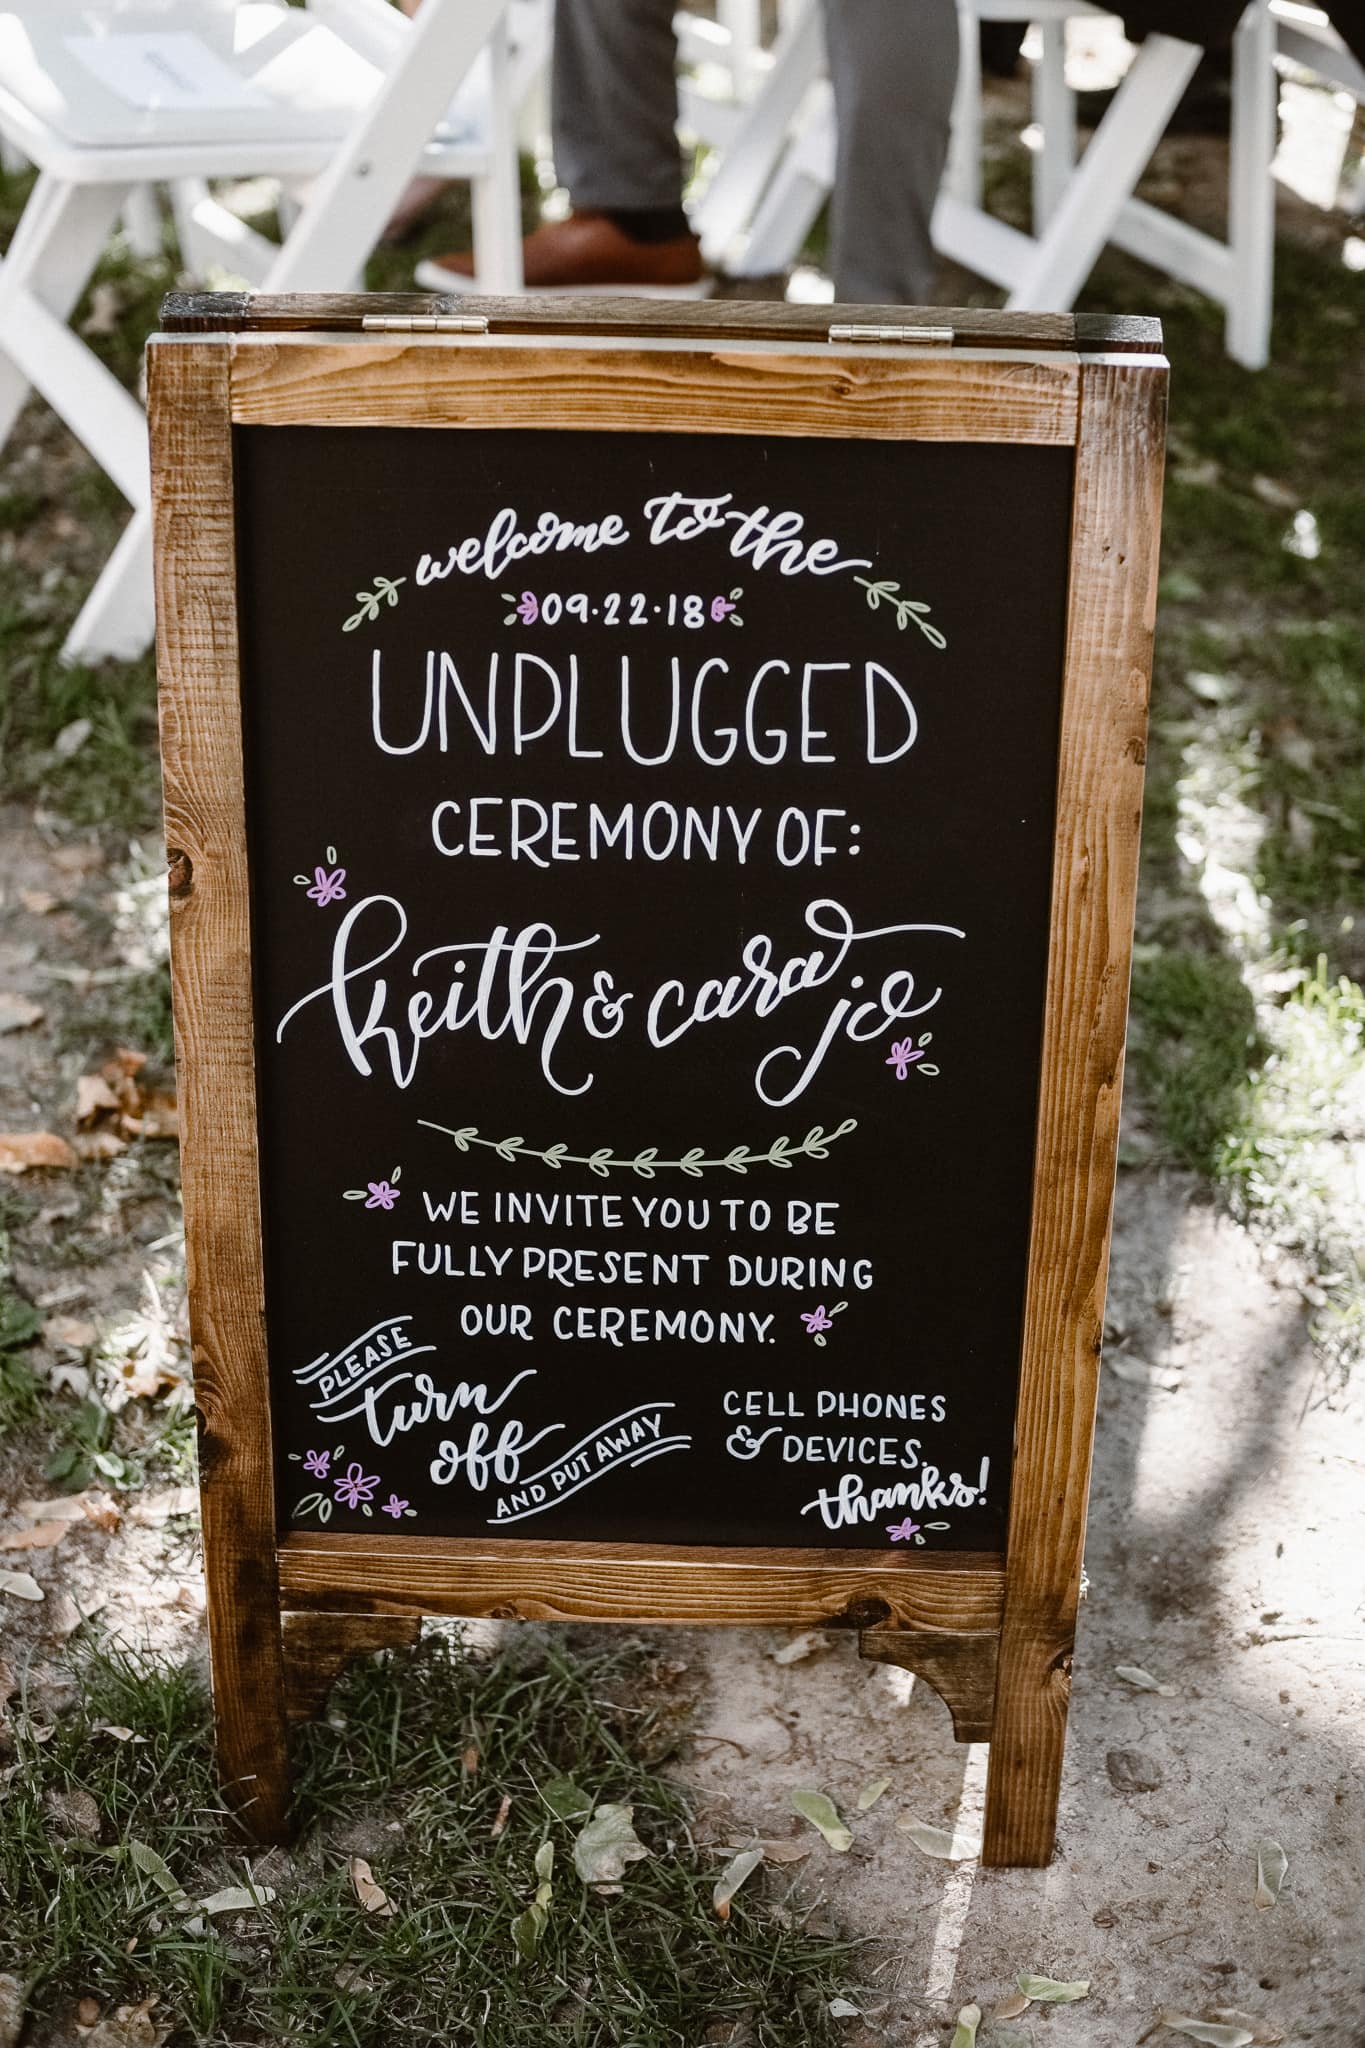 Grant Humphreys Mansion Wedding Photographer, Denver wedding photographer, Colorado wedding photographer, unplugged wedding ceremony chalkboard sign